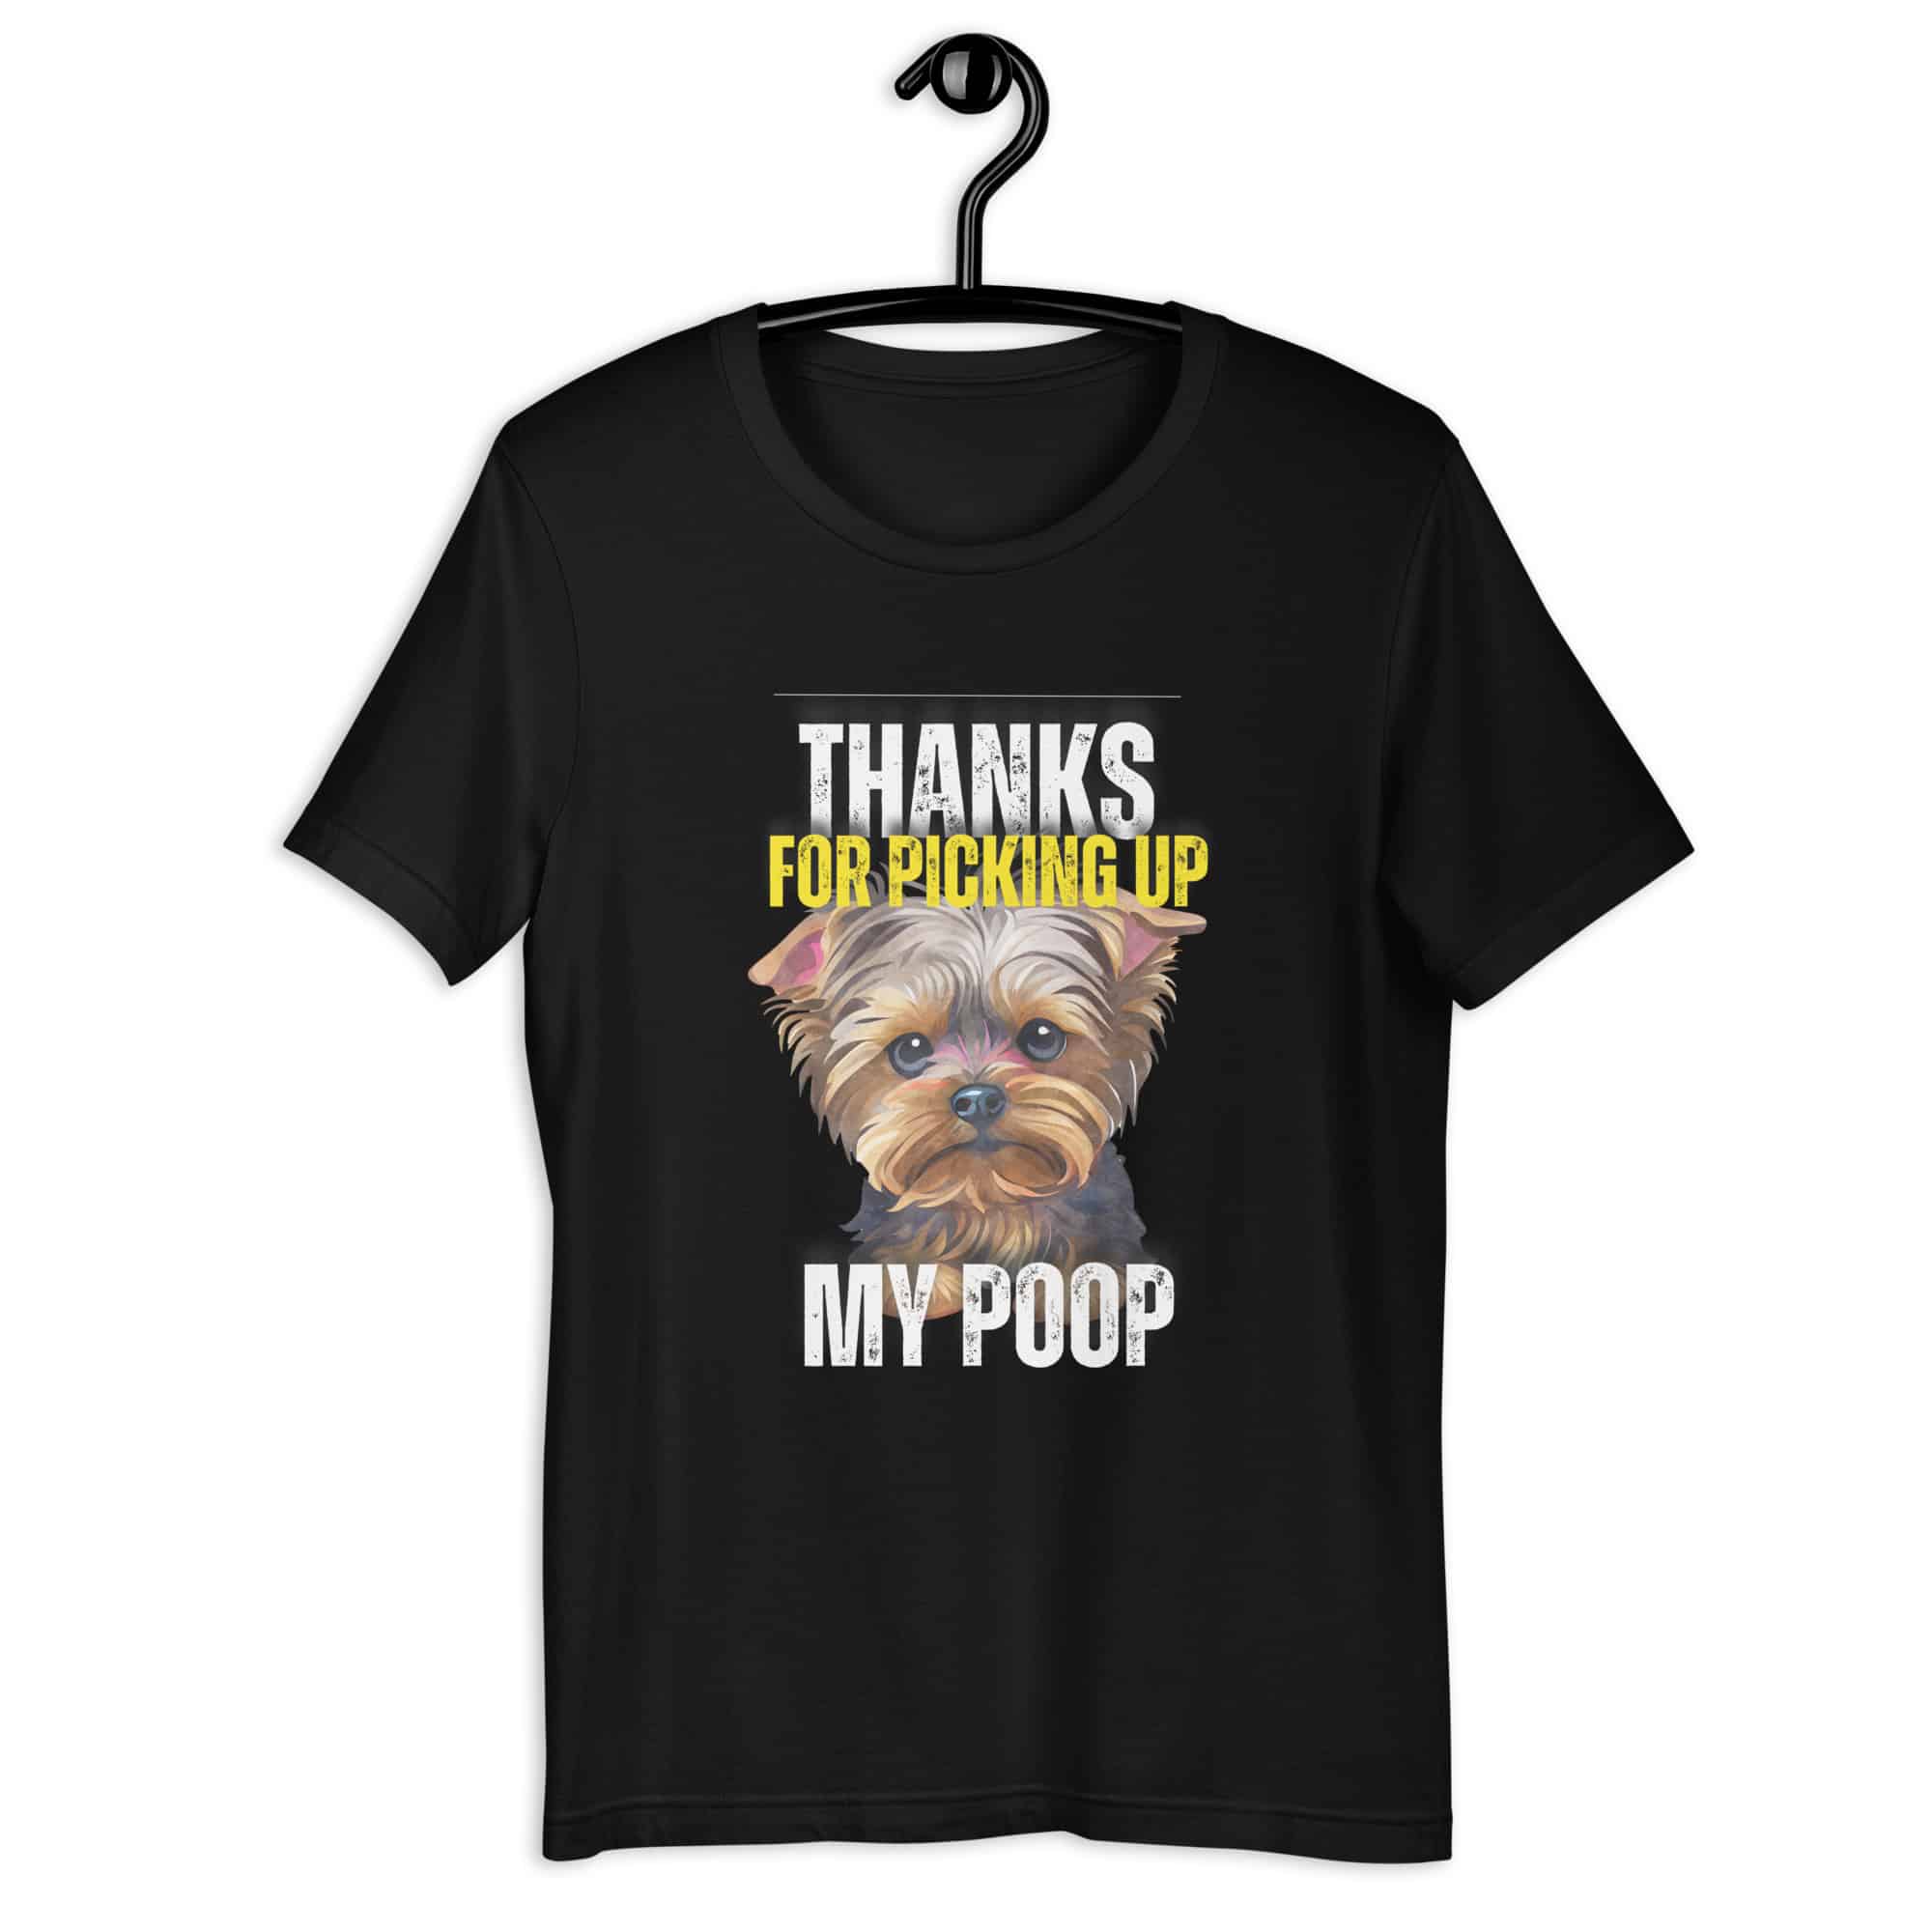 Thanks For Picking Up My POOP Funny Poodles Unisex T-Shirt. Black